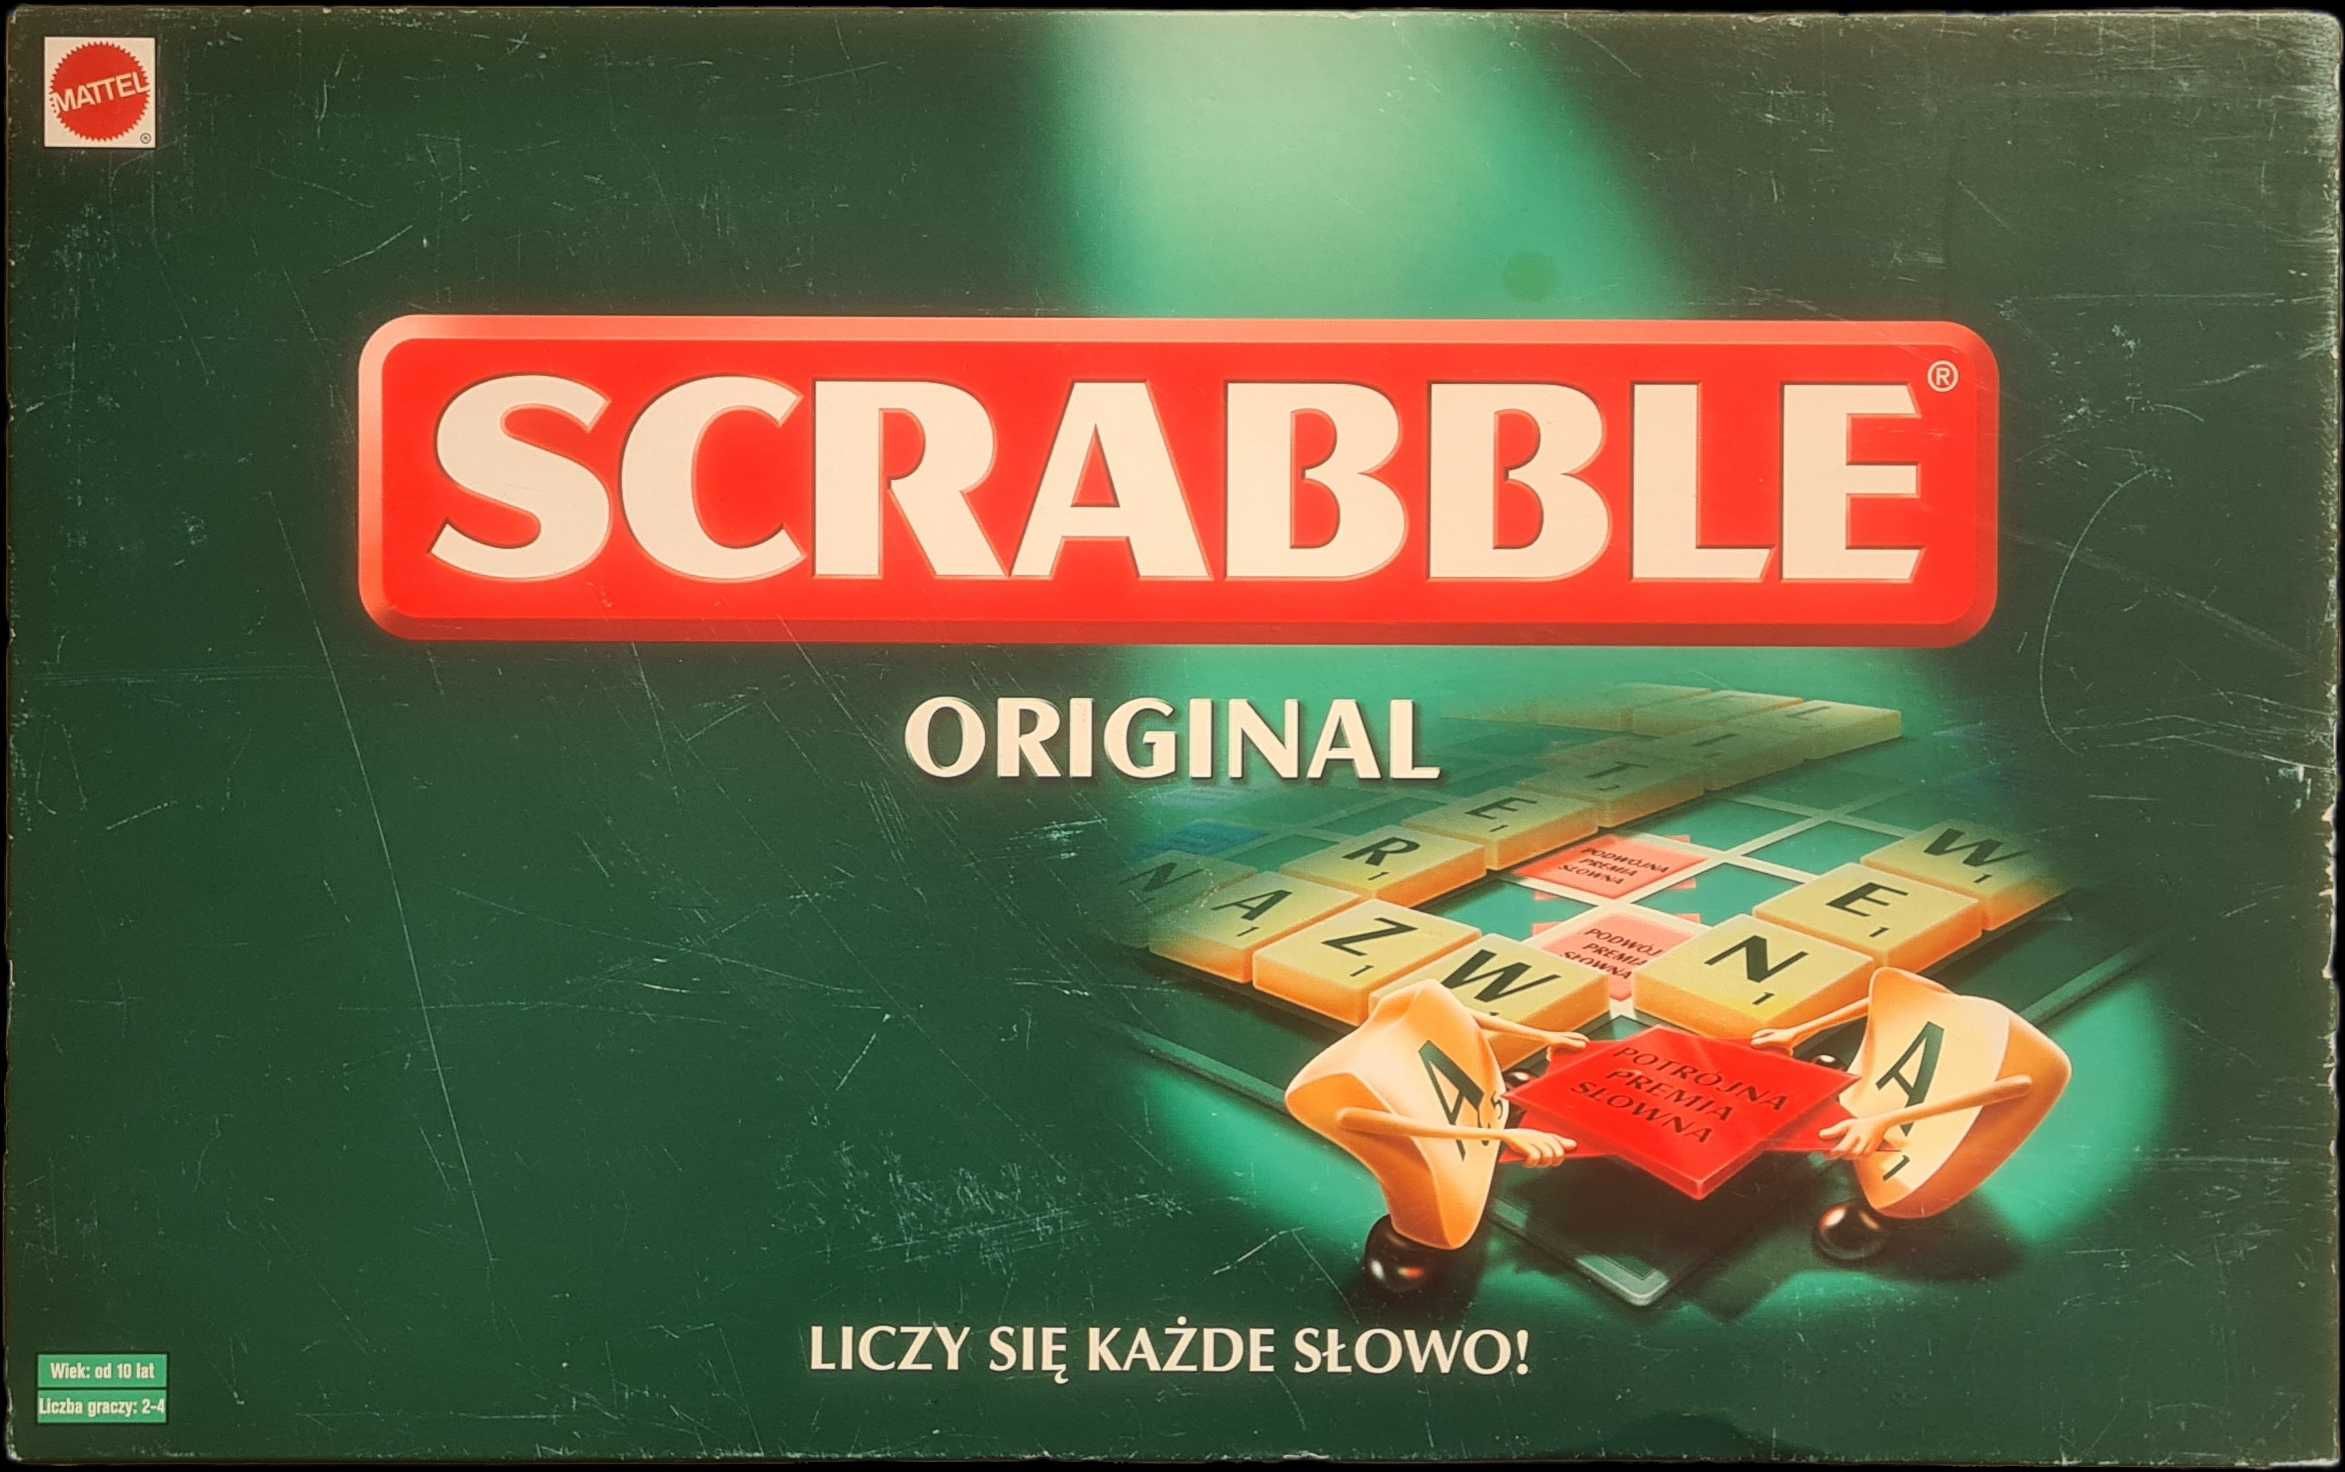 Scrabble Original Unikat dla kolekcjonera. Polska wersja z 2000 roku